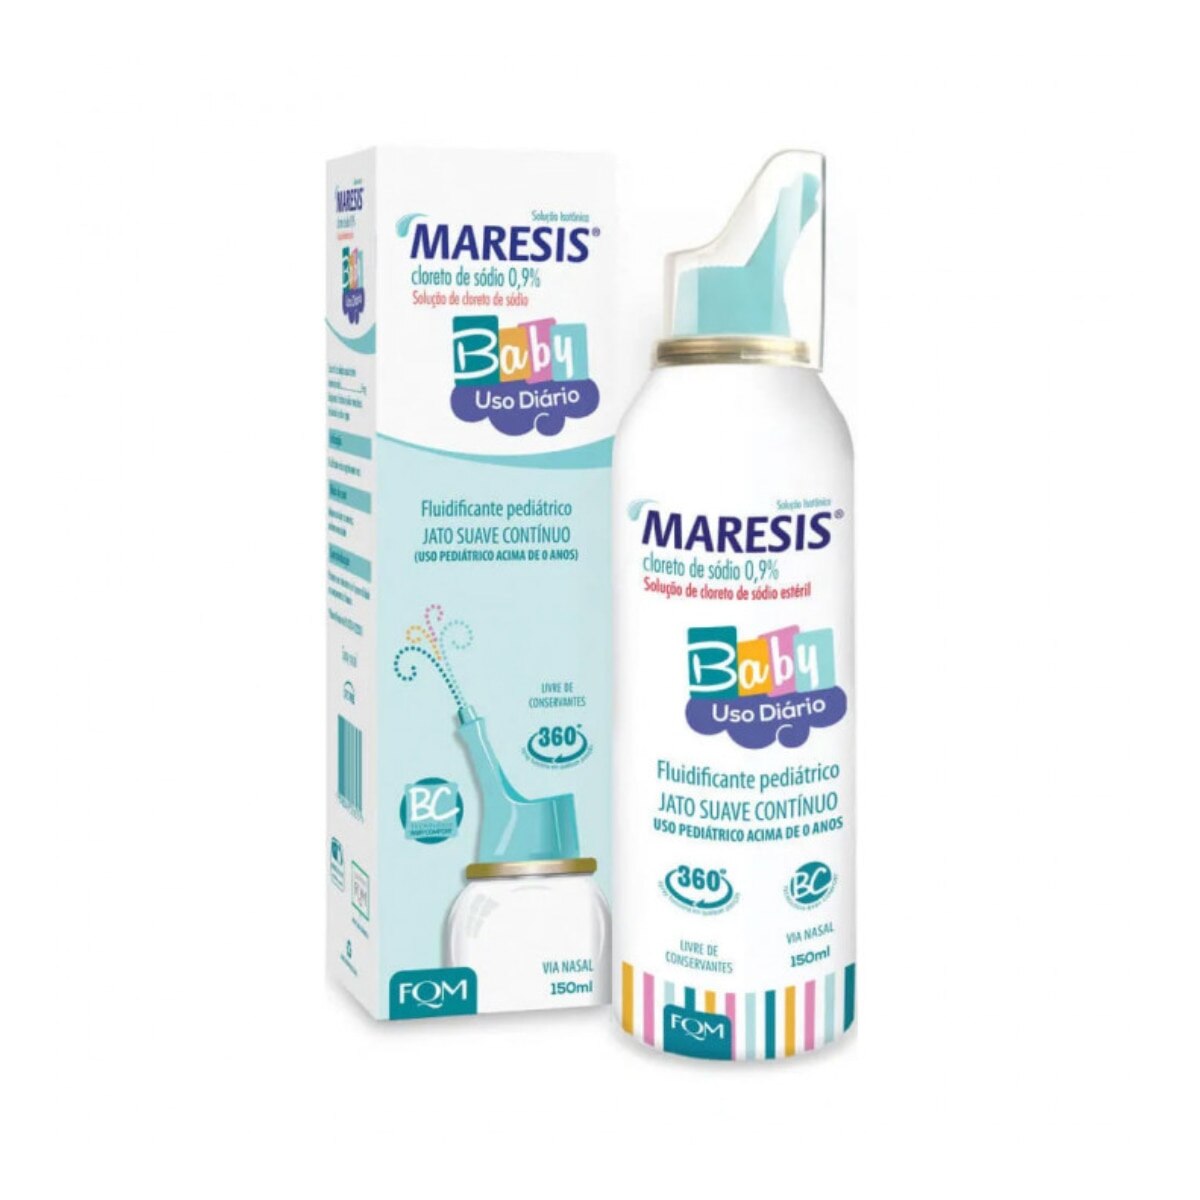 Maresis Baby 0,9% Spray Nasal 150ml